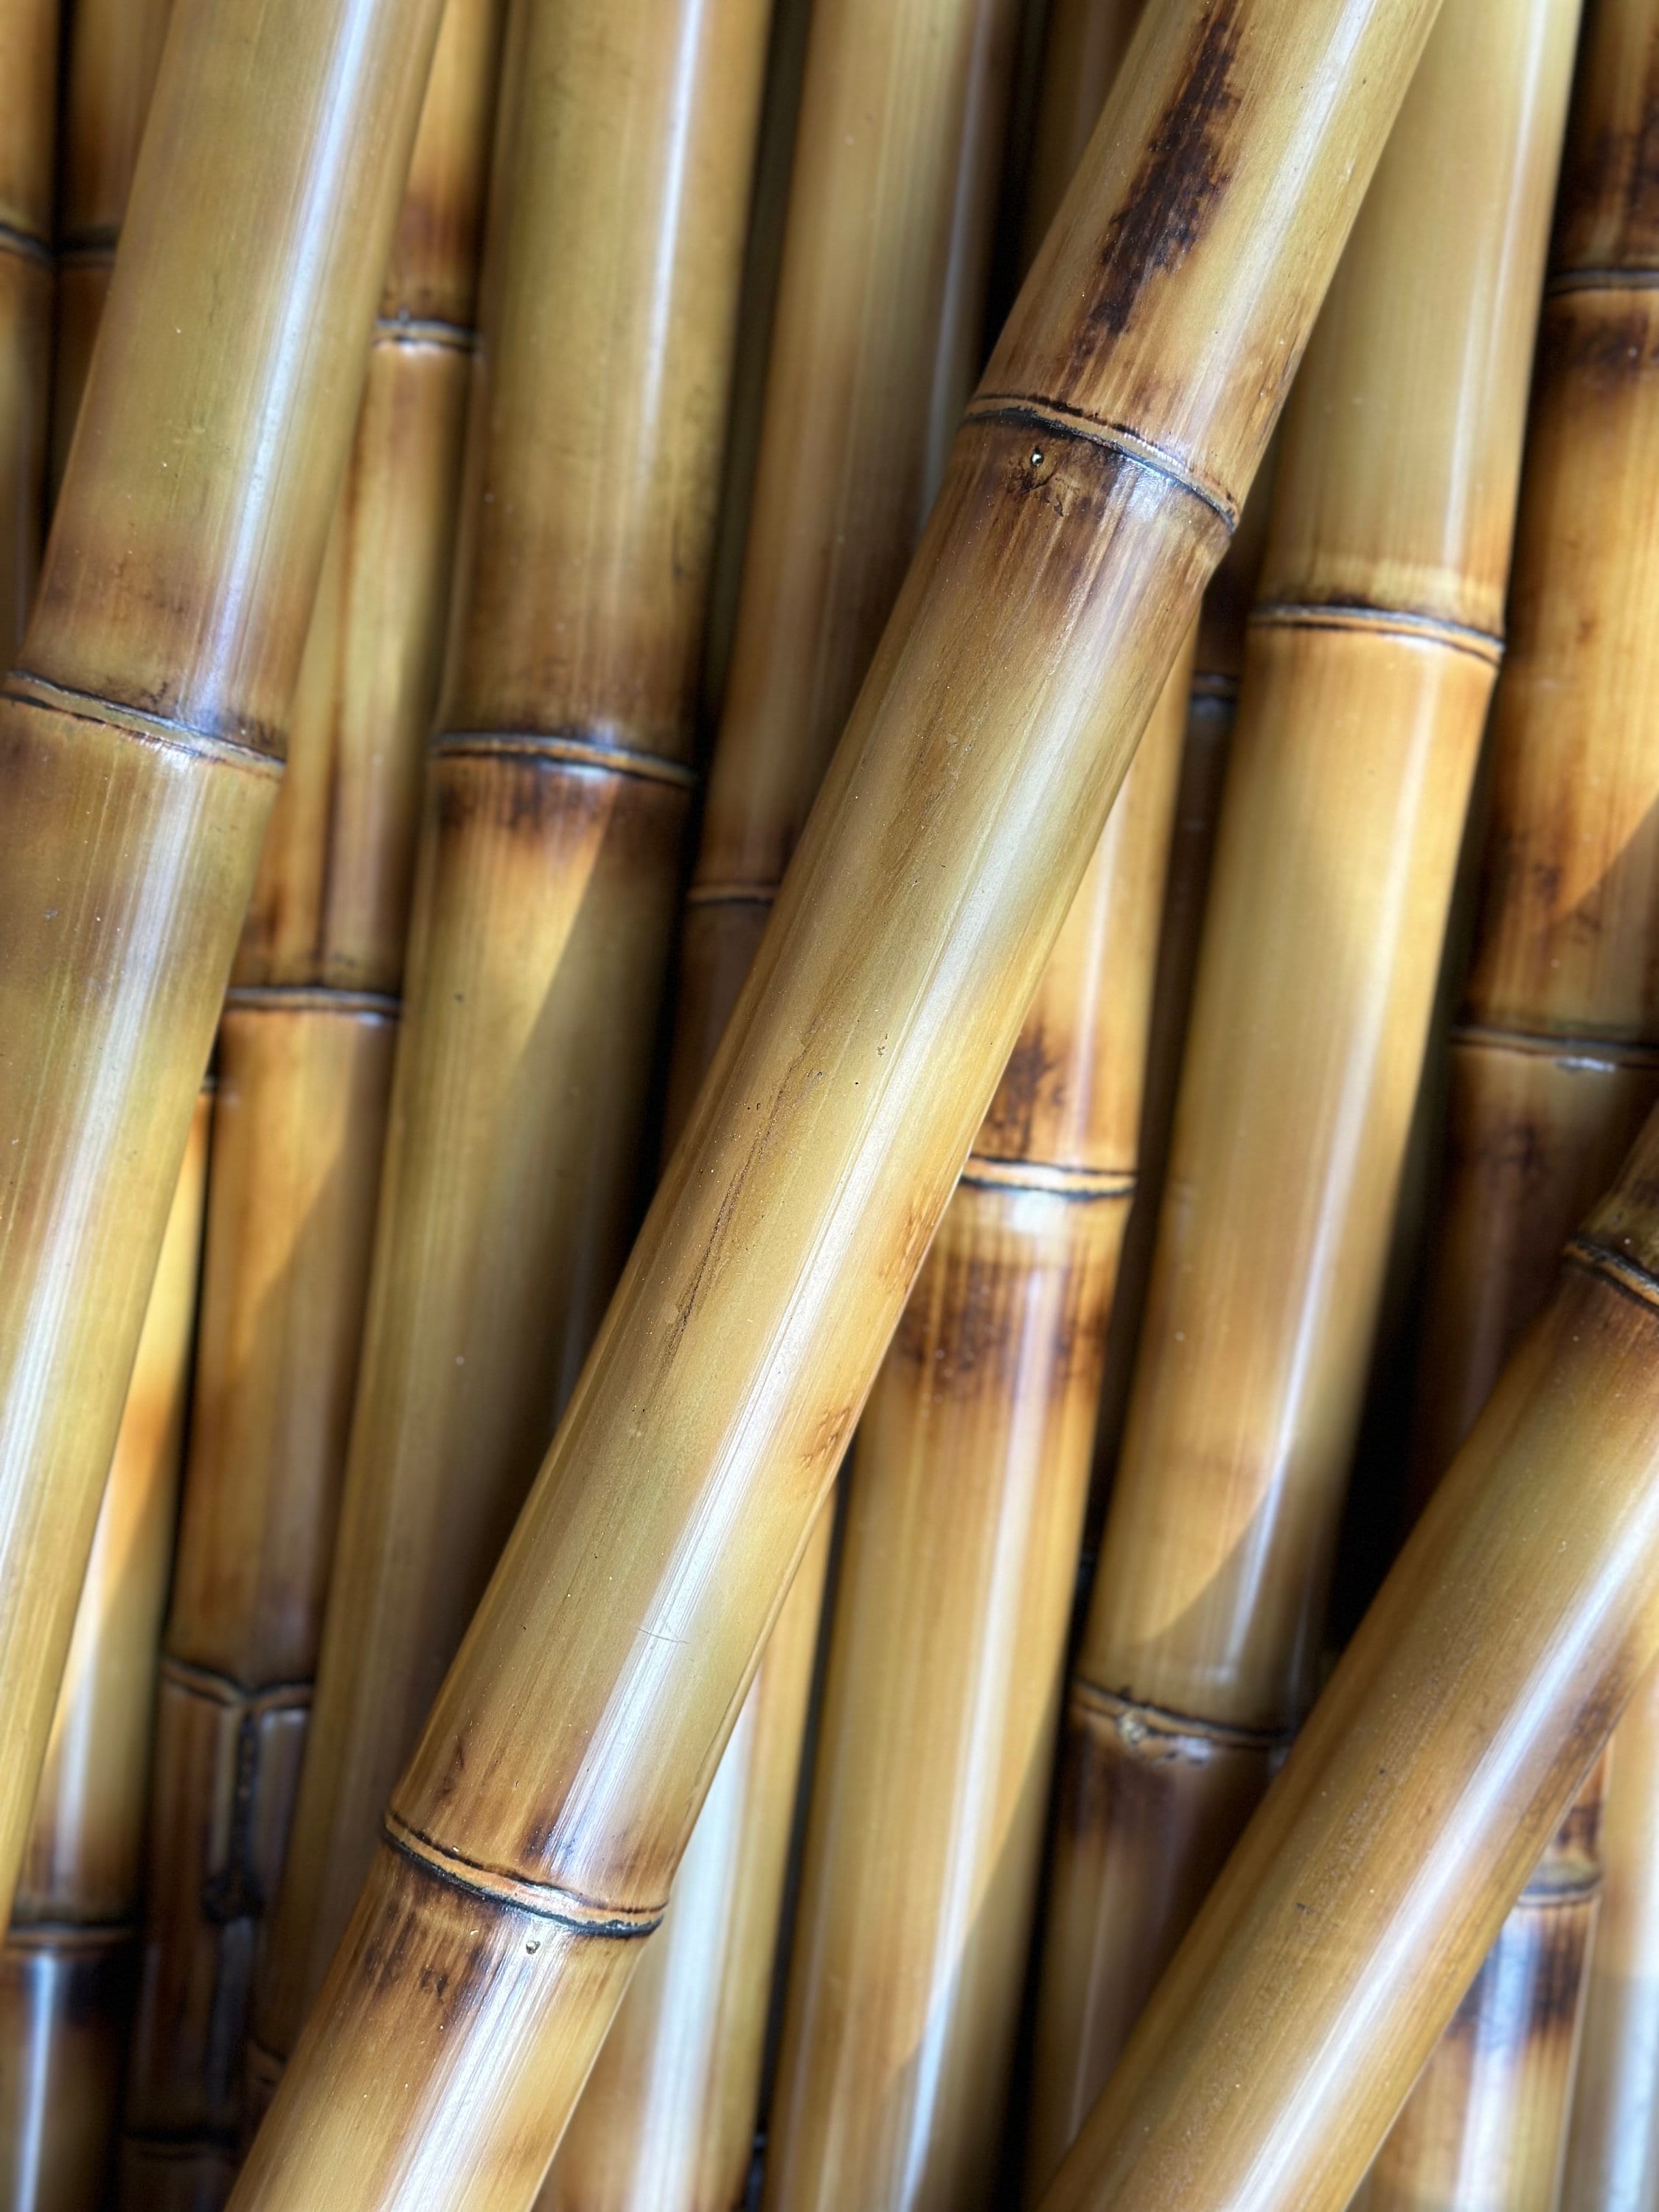 Shop Bamboo Stick 70 cm online